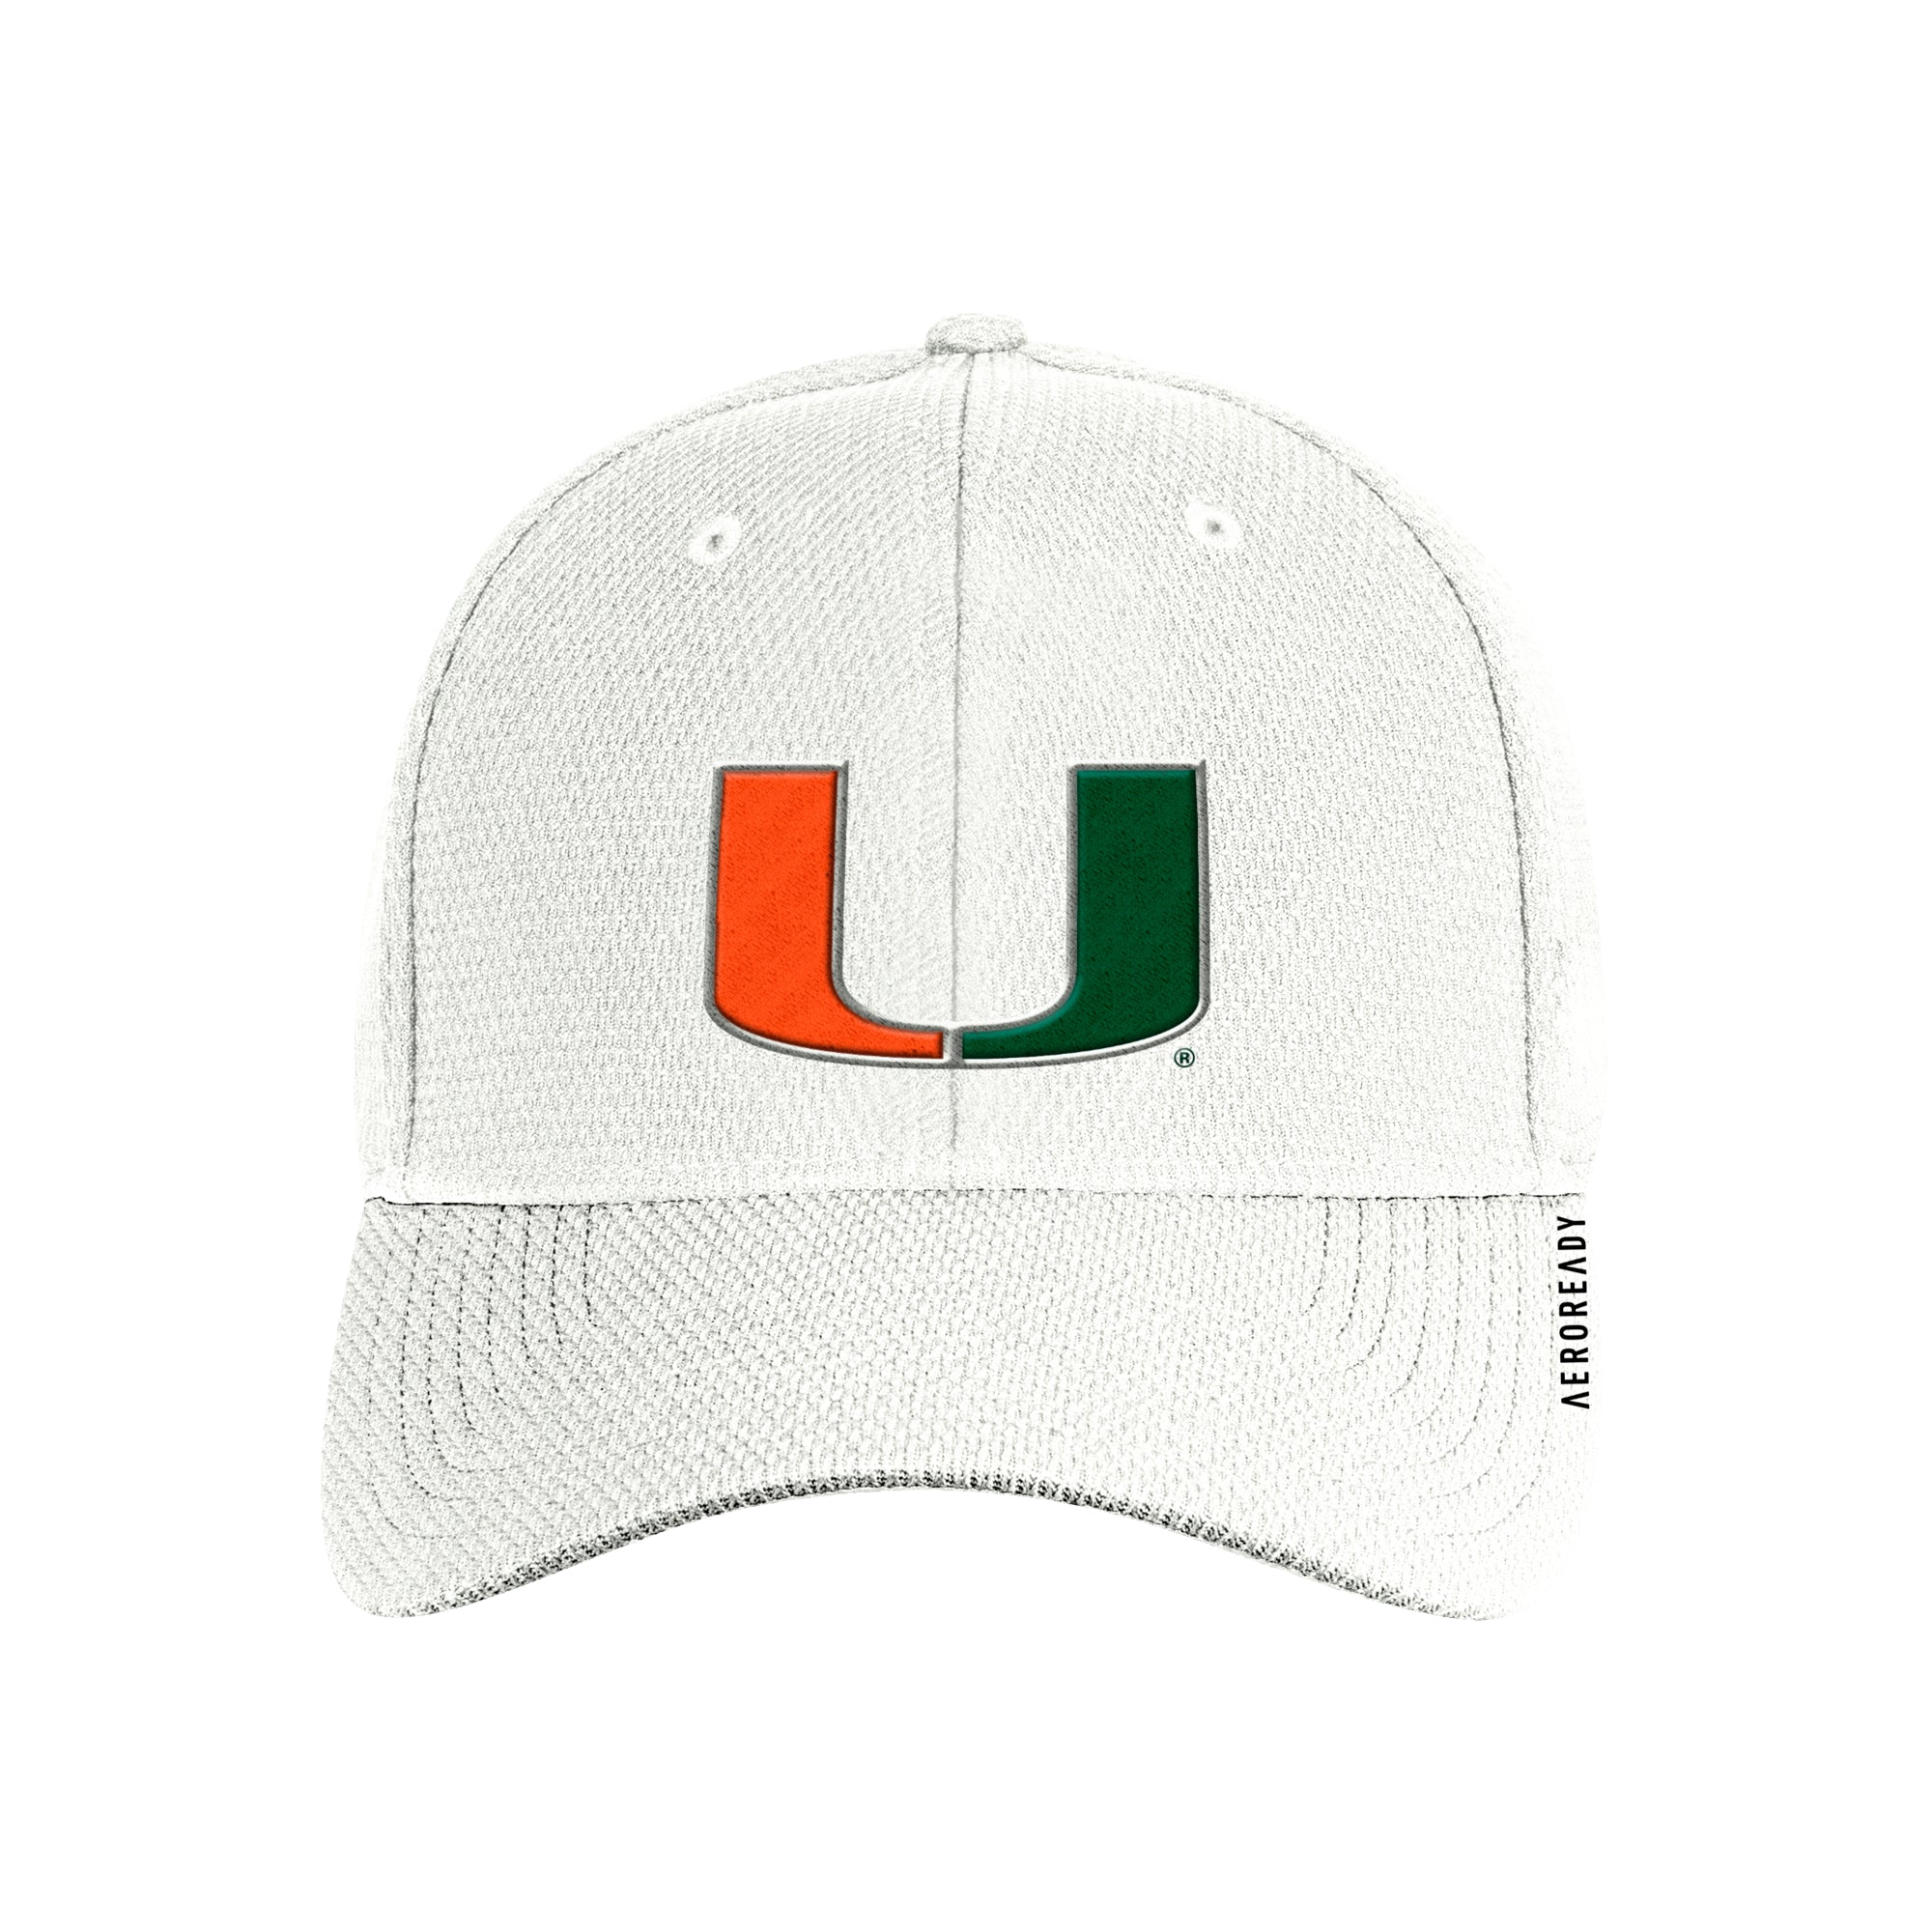 Adidas Florida Panthers White Local Coach Flex Hat Size: Small/Medium